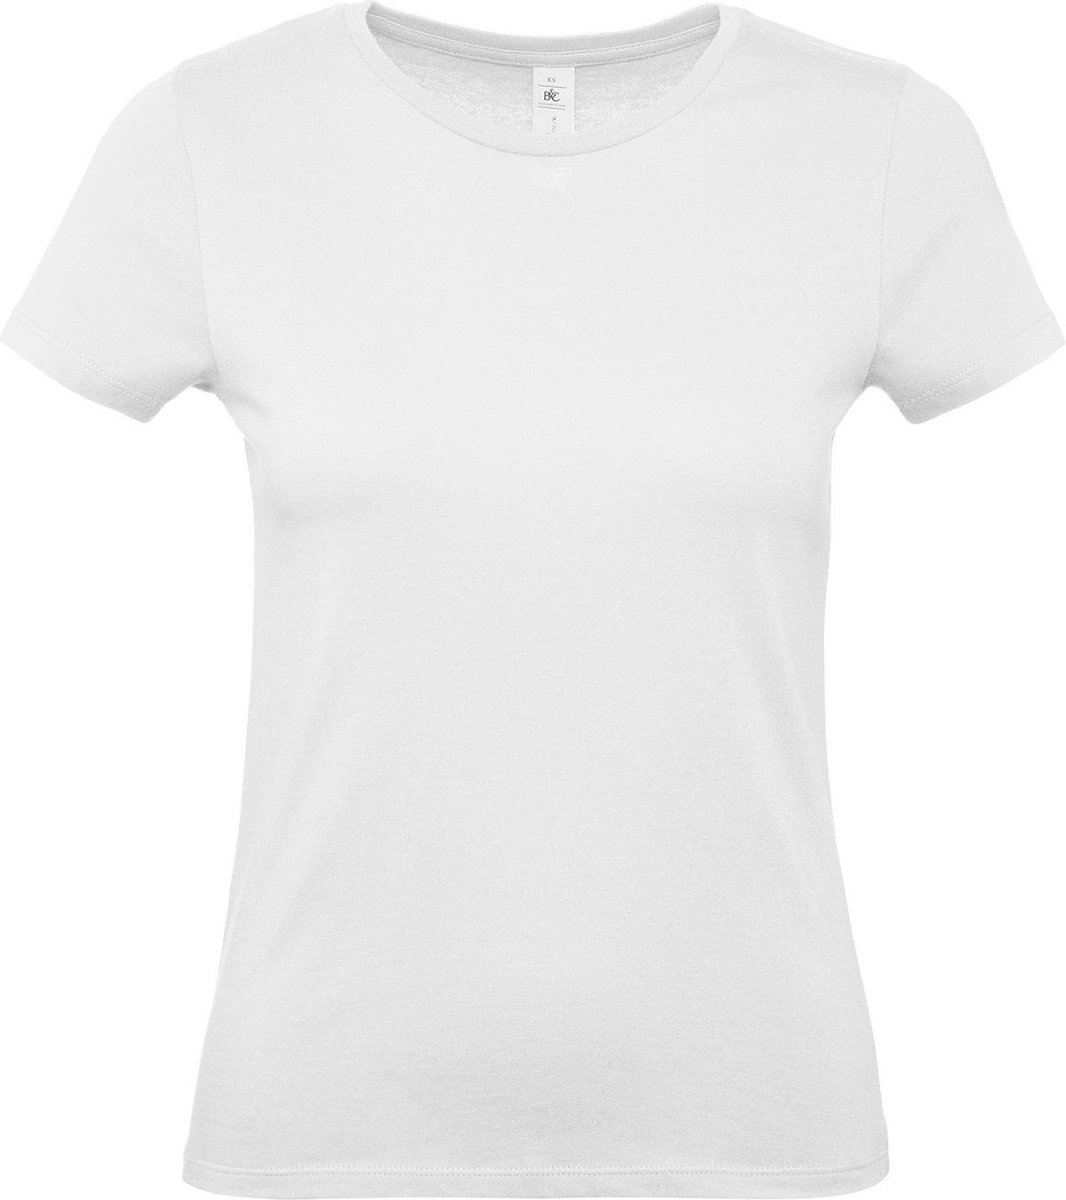 Wit basic t-shirts voor dames met ronde hals - katoen - 145 grams - witte shirts / kleding 2XL (44)